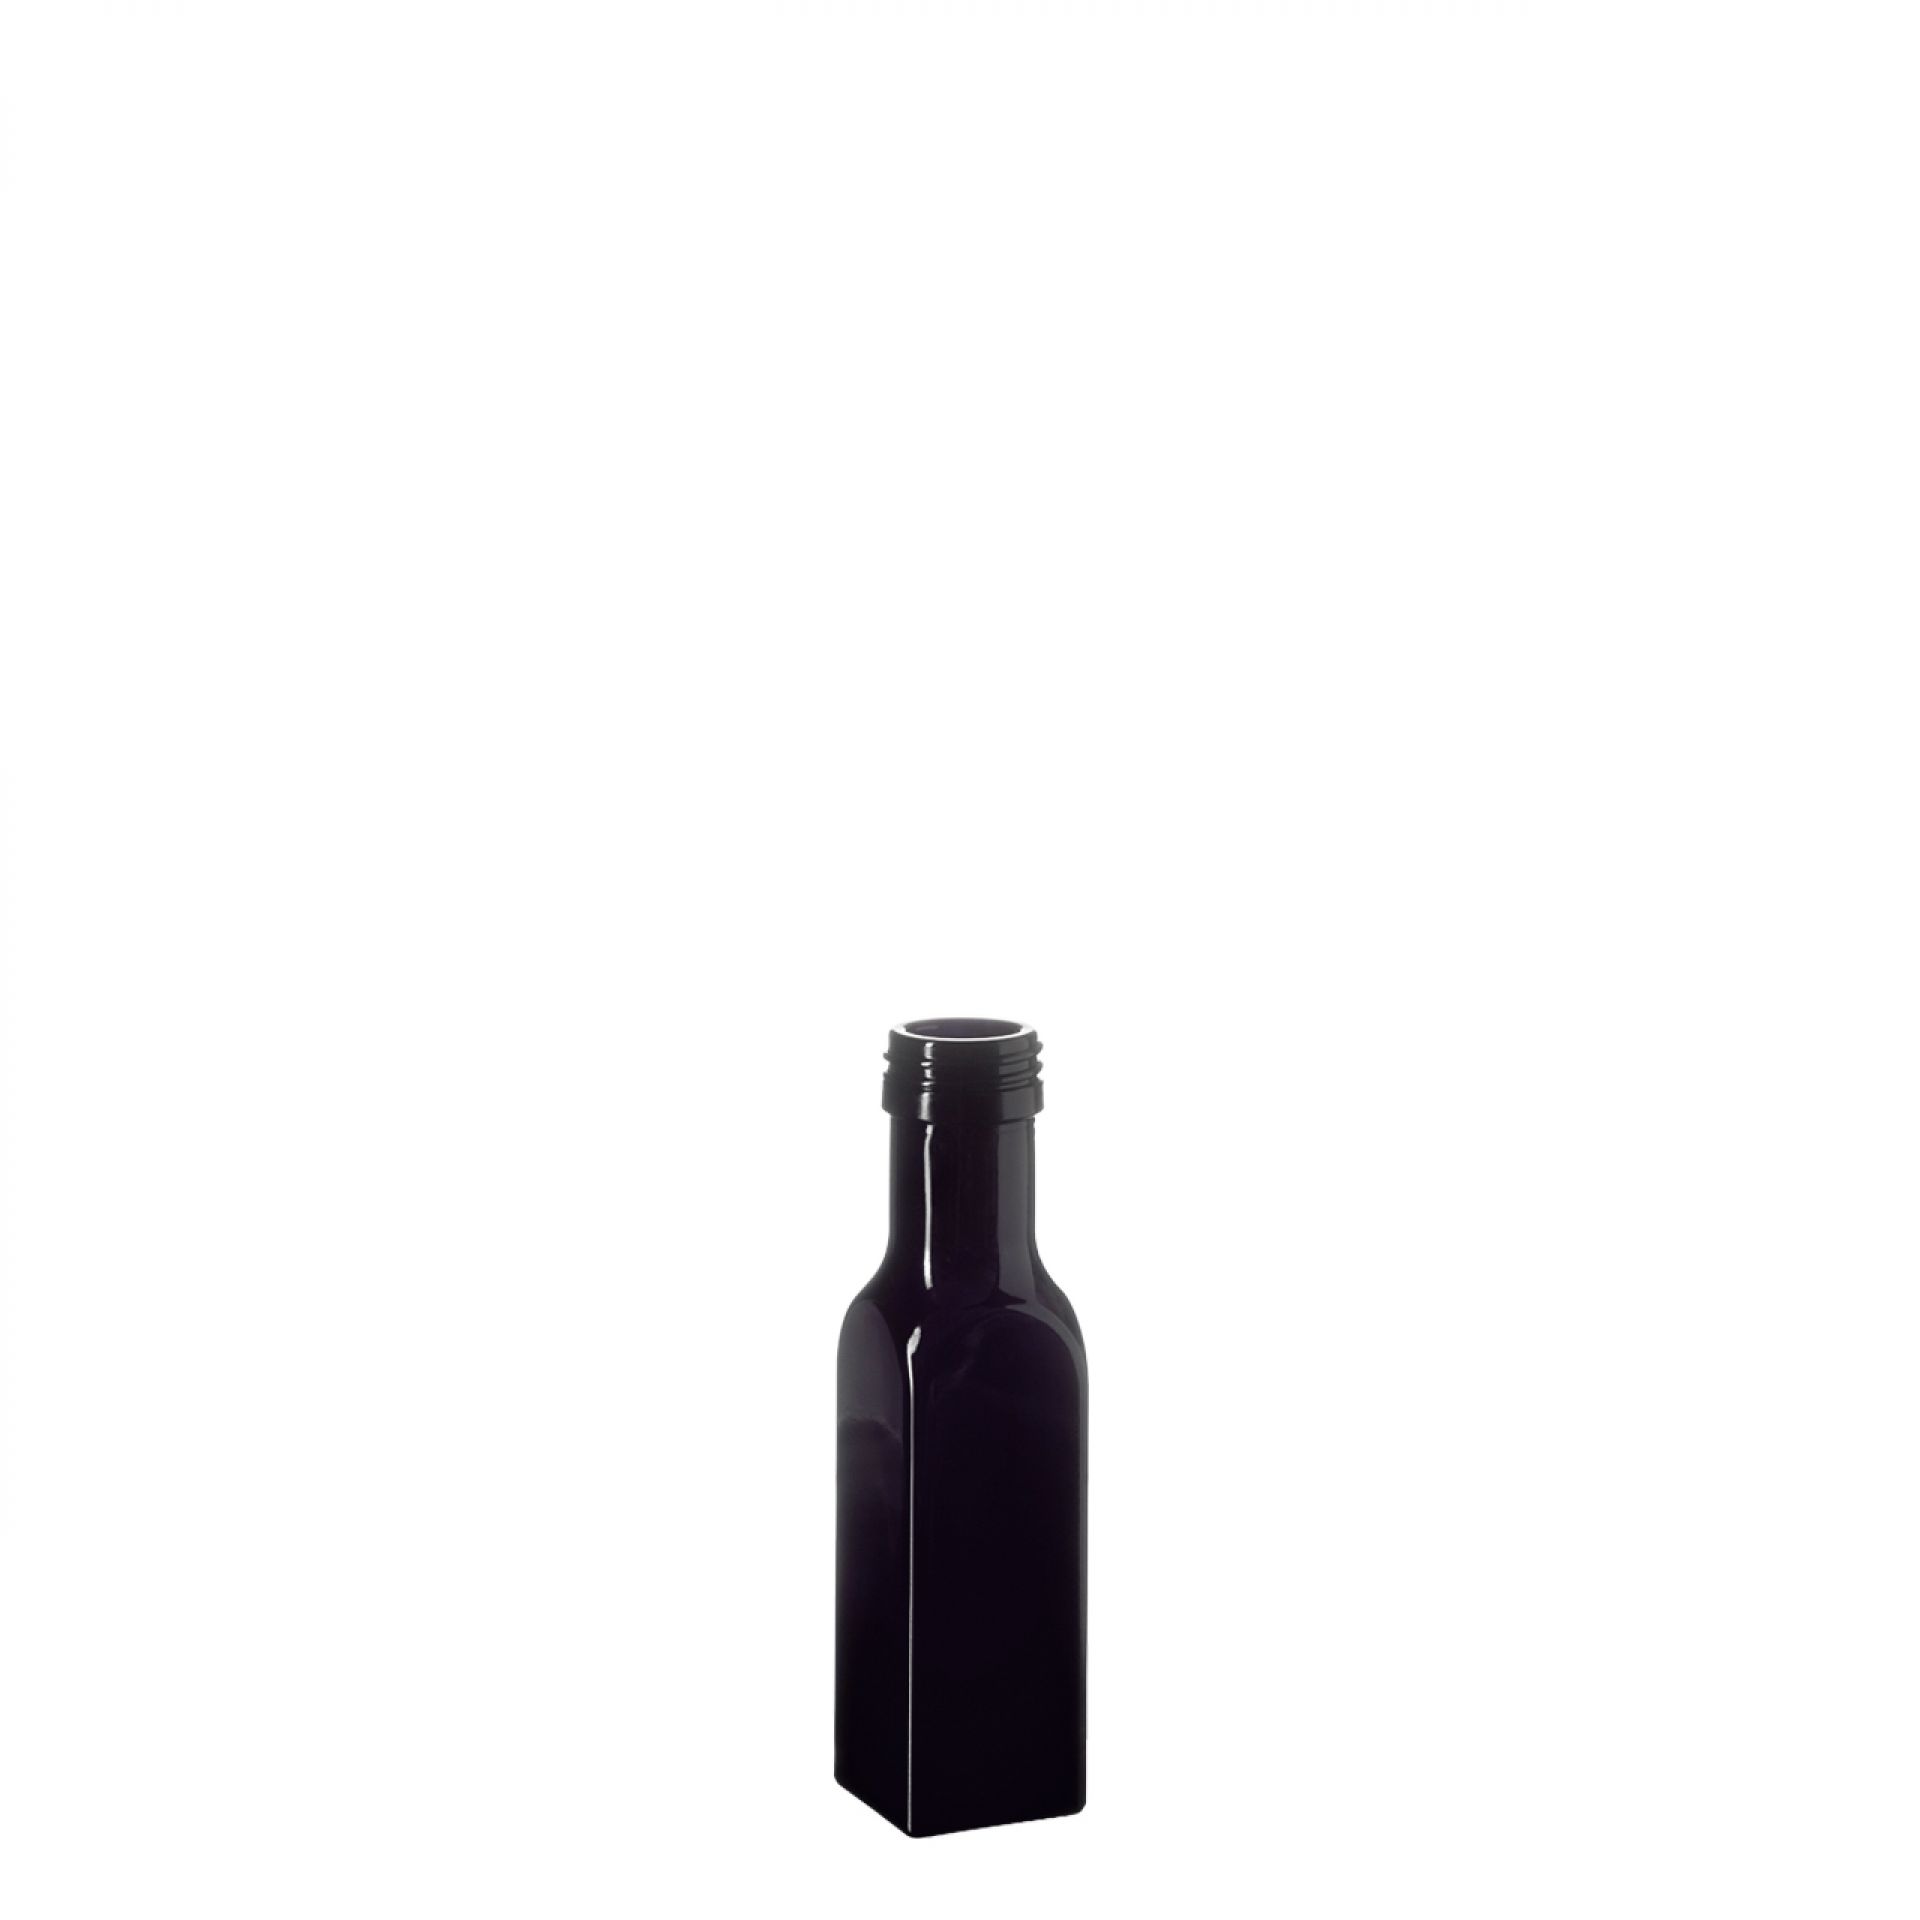 Oil bottle Castor 100ml, 31.5 STD thread, square, Miron